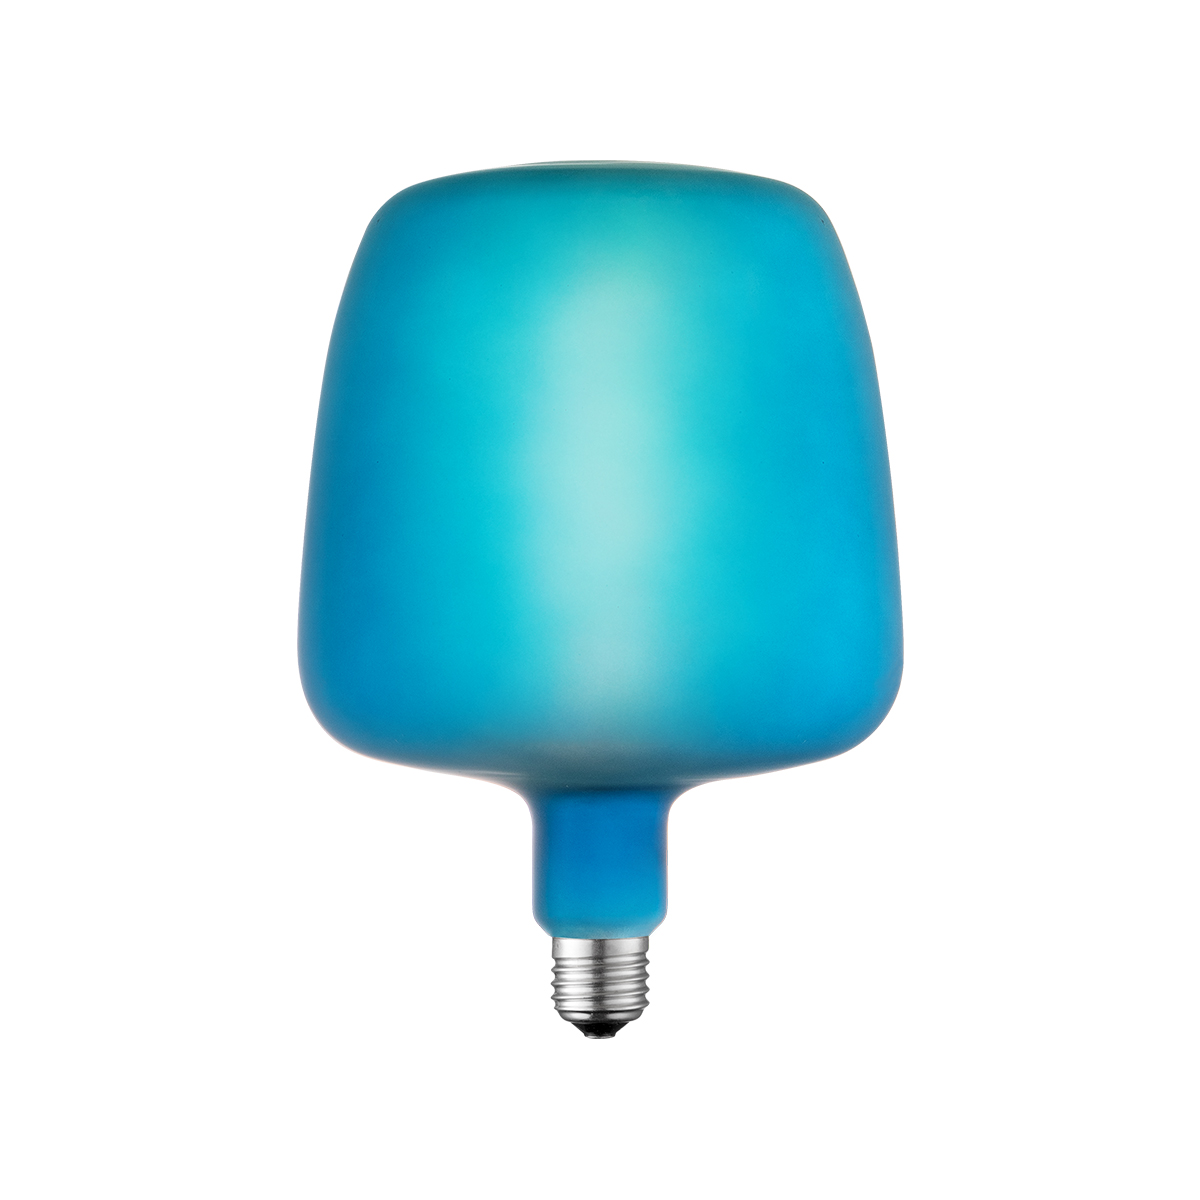 Tangla lighting - TLB-9003-04BL - LED Light Bulb Single Spiral filament - 4W blue opal - large - non dimmable - E27